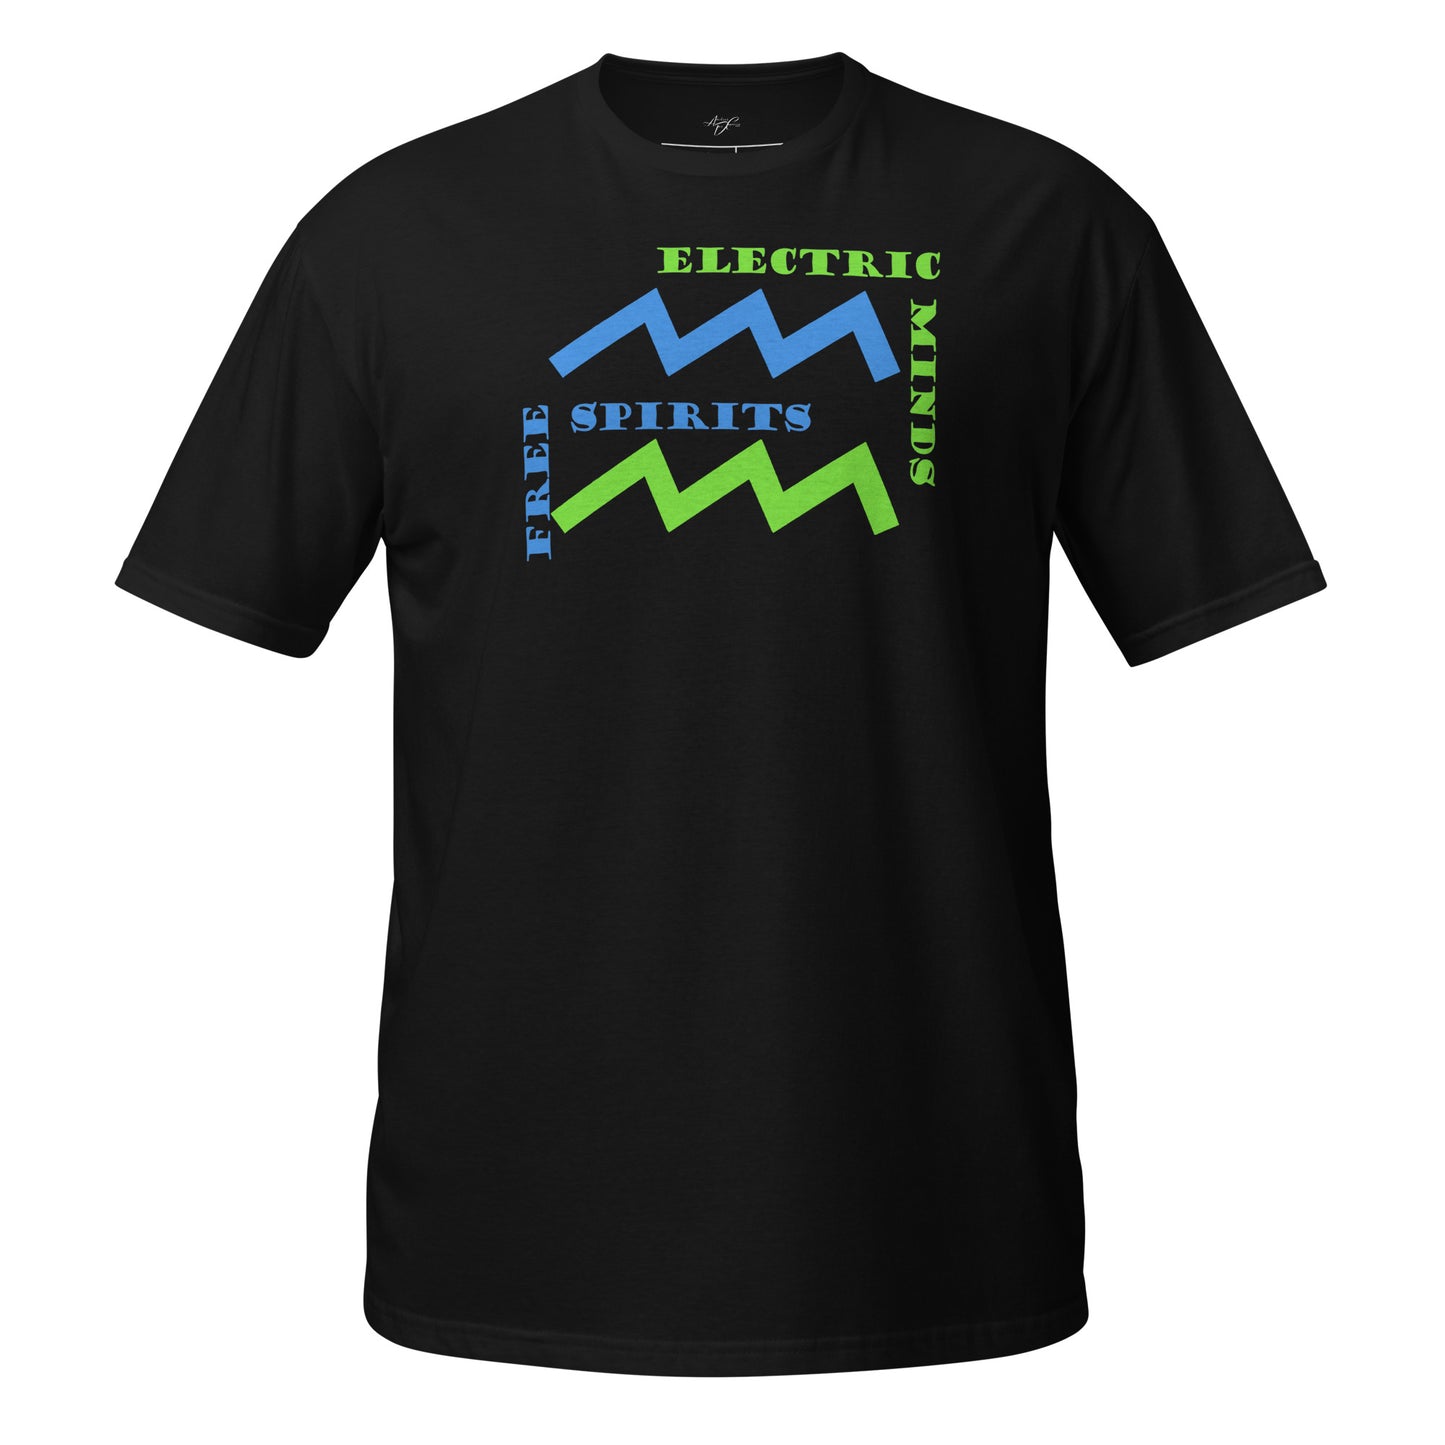 Aquarius Zodiac Energy T-Shirt - Electric Spirits Unisex Softstyle by Atelier Des Caprices